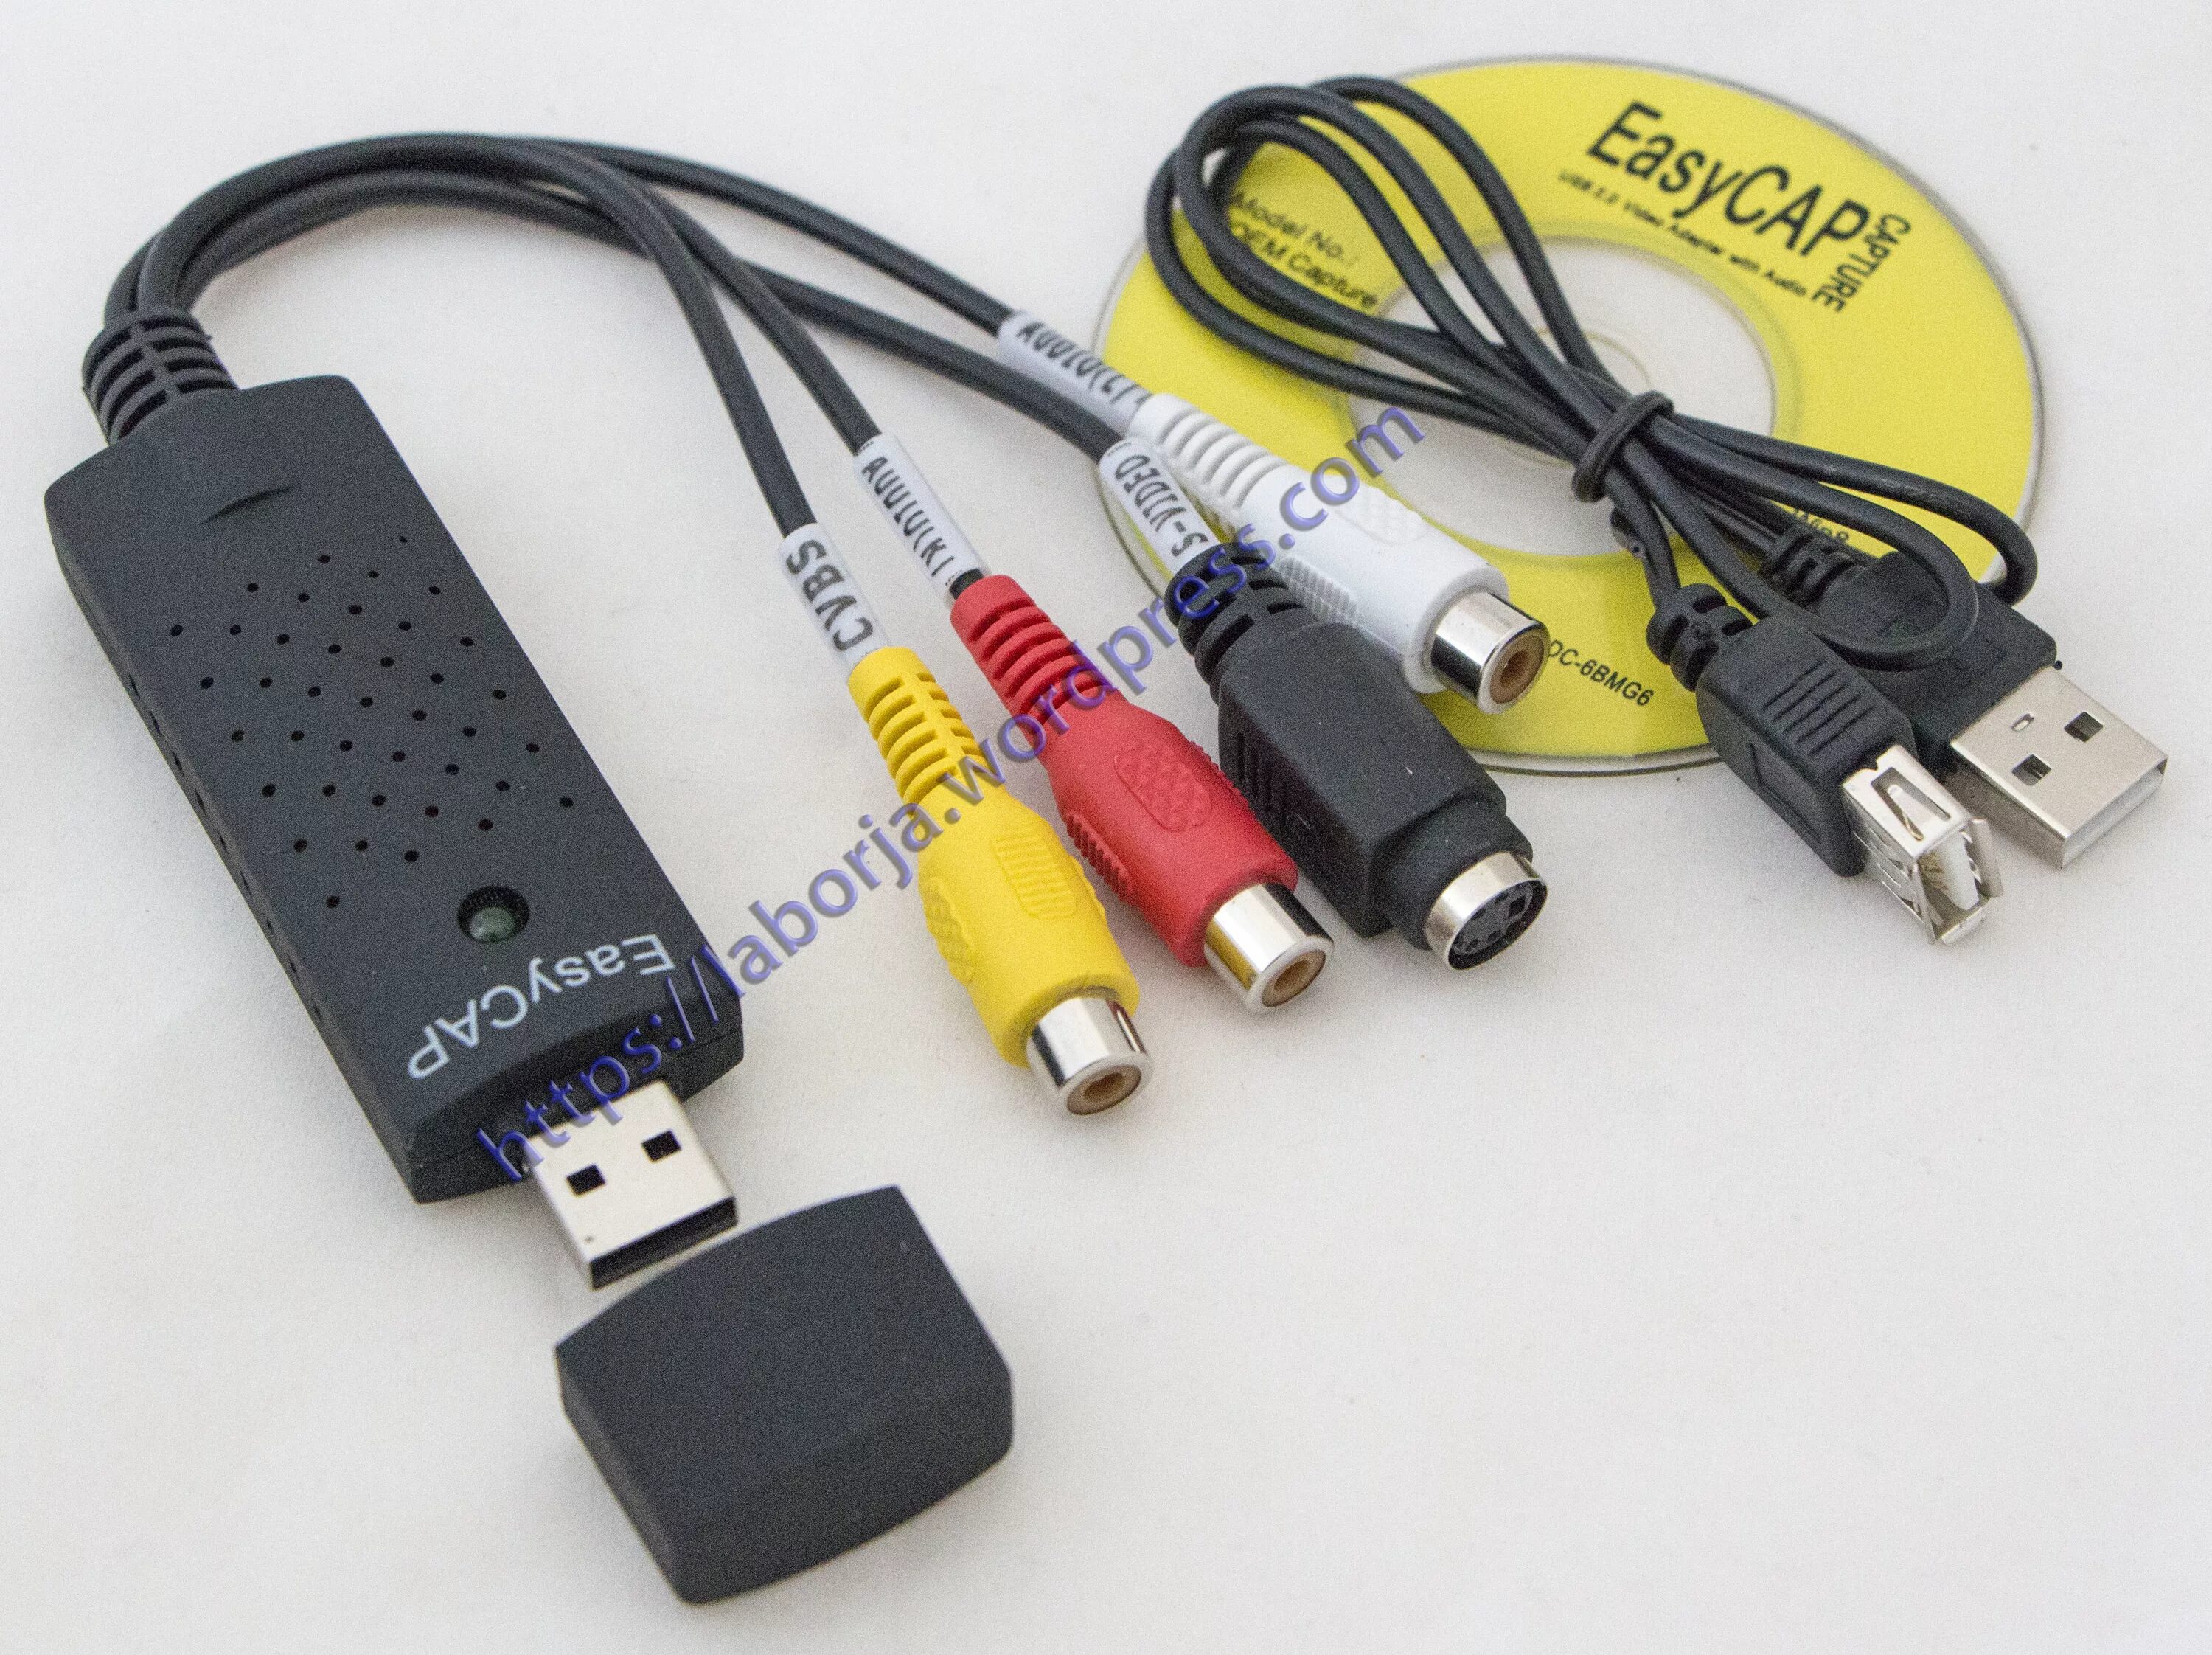 EASYCAP USB 2.0. Видеозахвата EASYCAP. USB capture Card. Программа видеозахвата для EASYCAP USB 2.0. Easycap захват